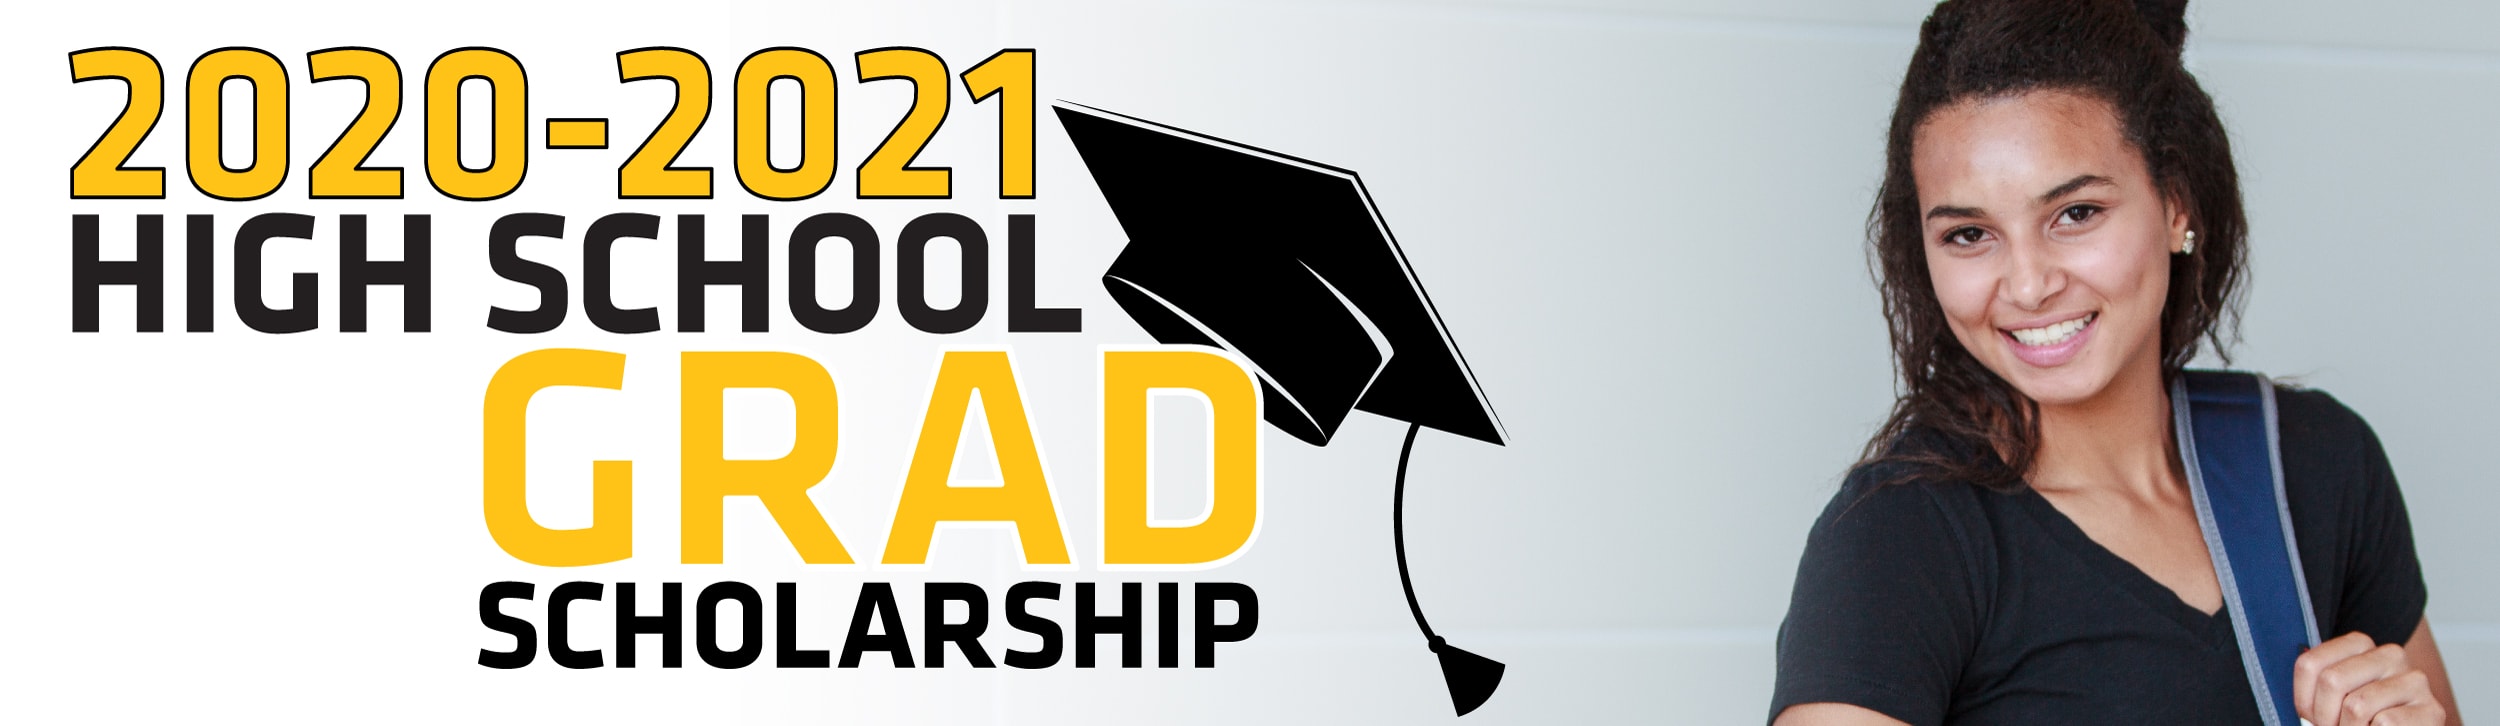 2020-2021 High School Grad Scholarship